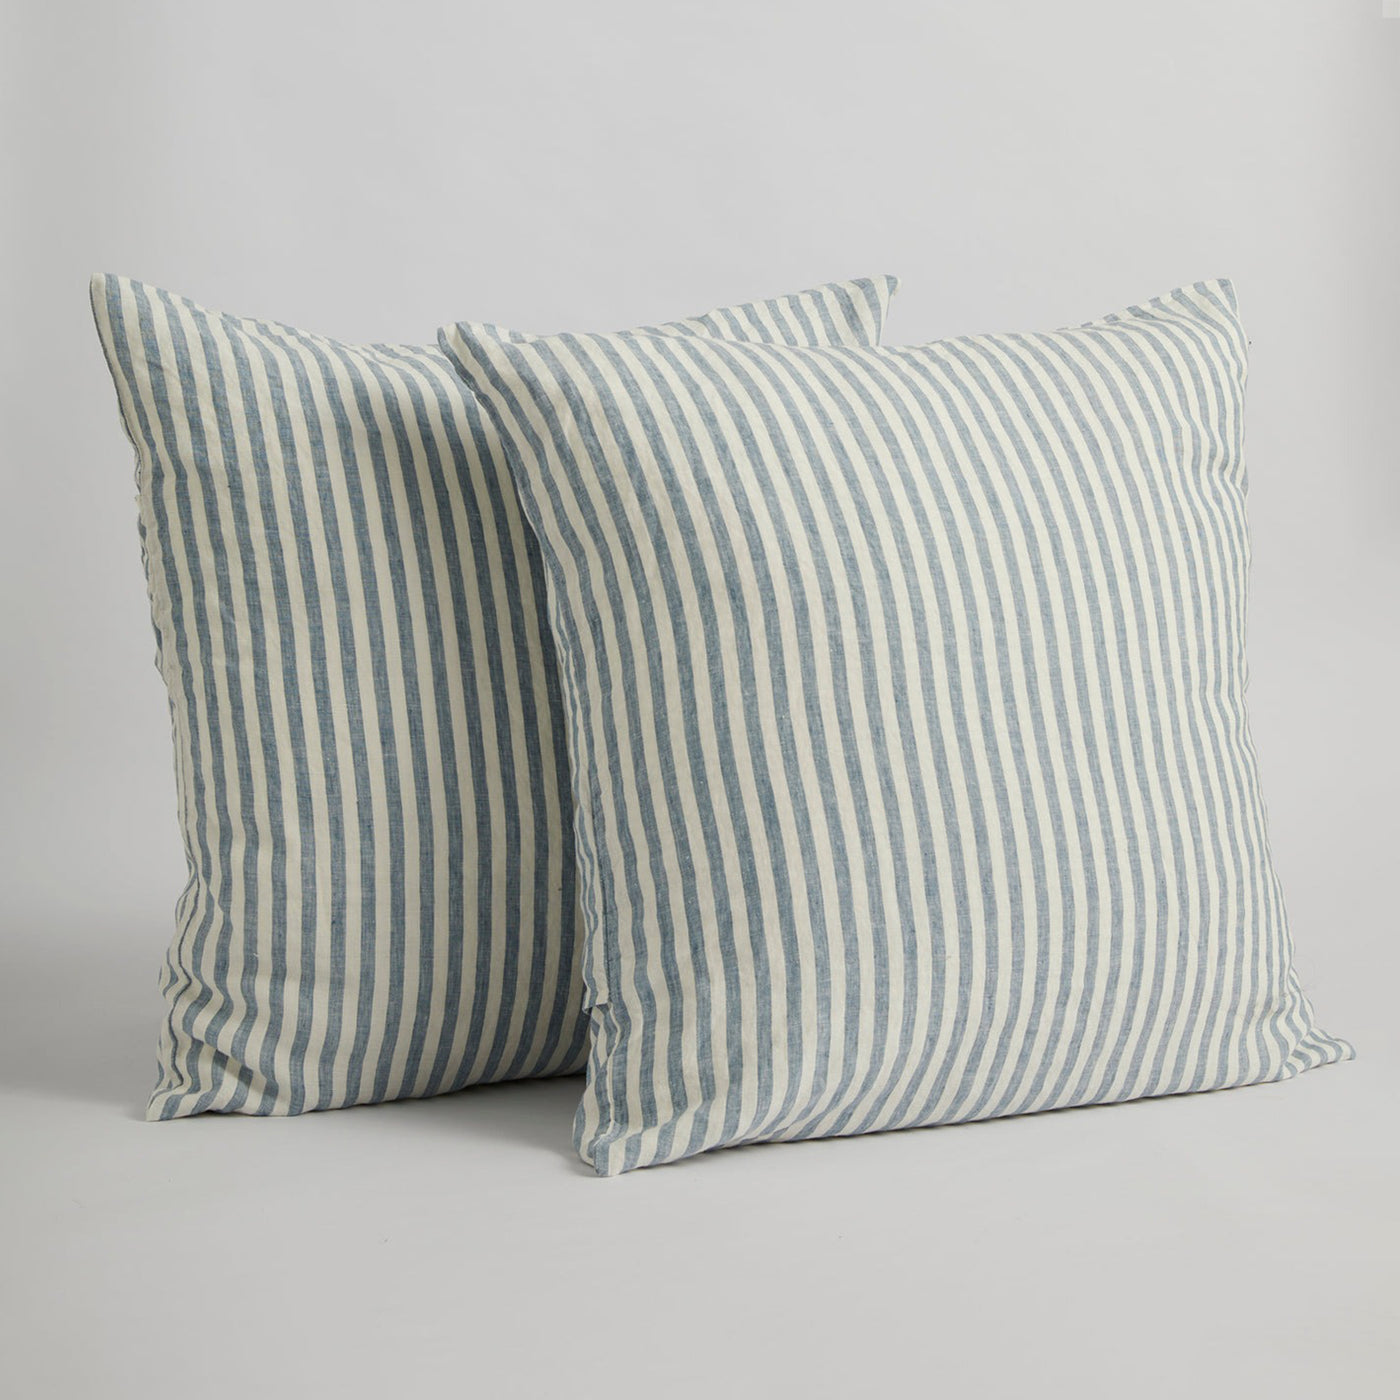 French Flax Linen Pillowcase Set in Marine Blue Stripe